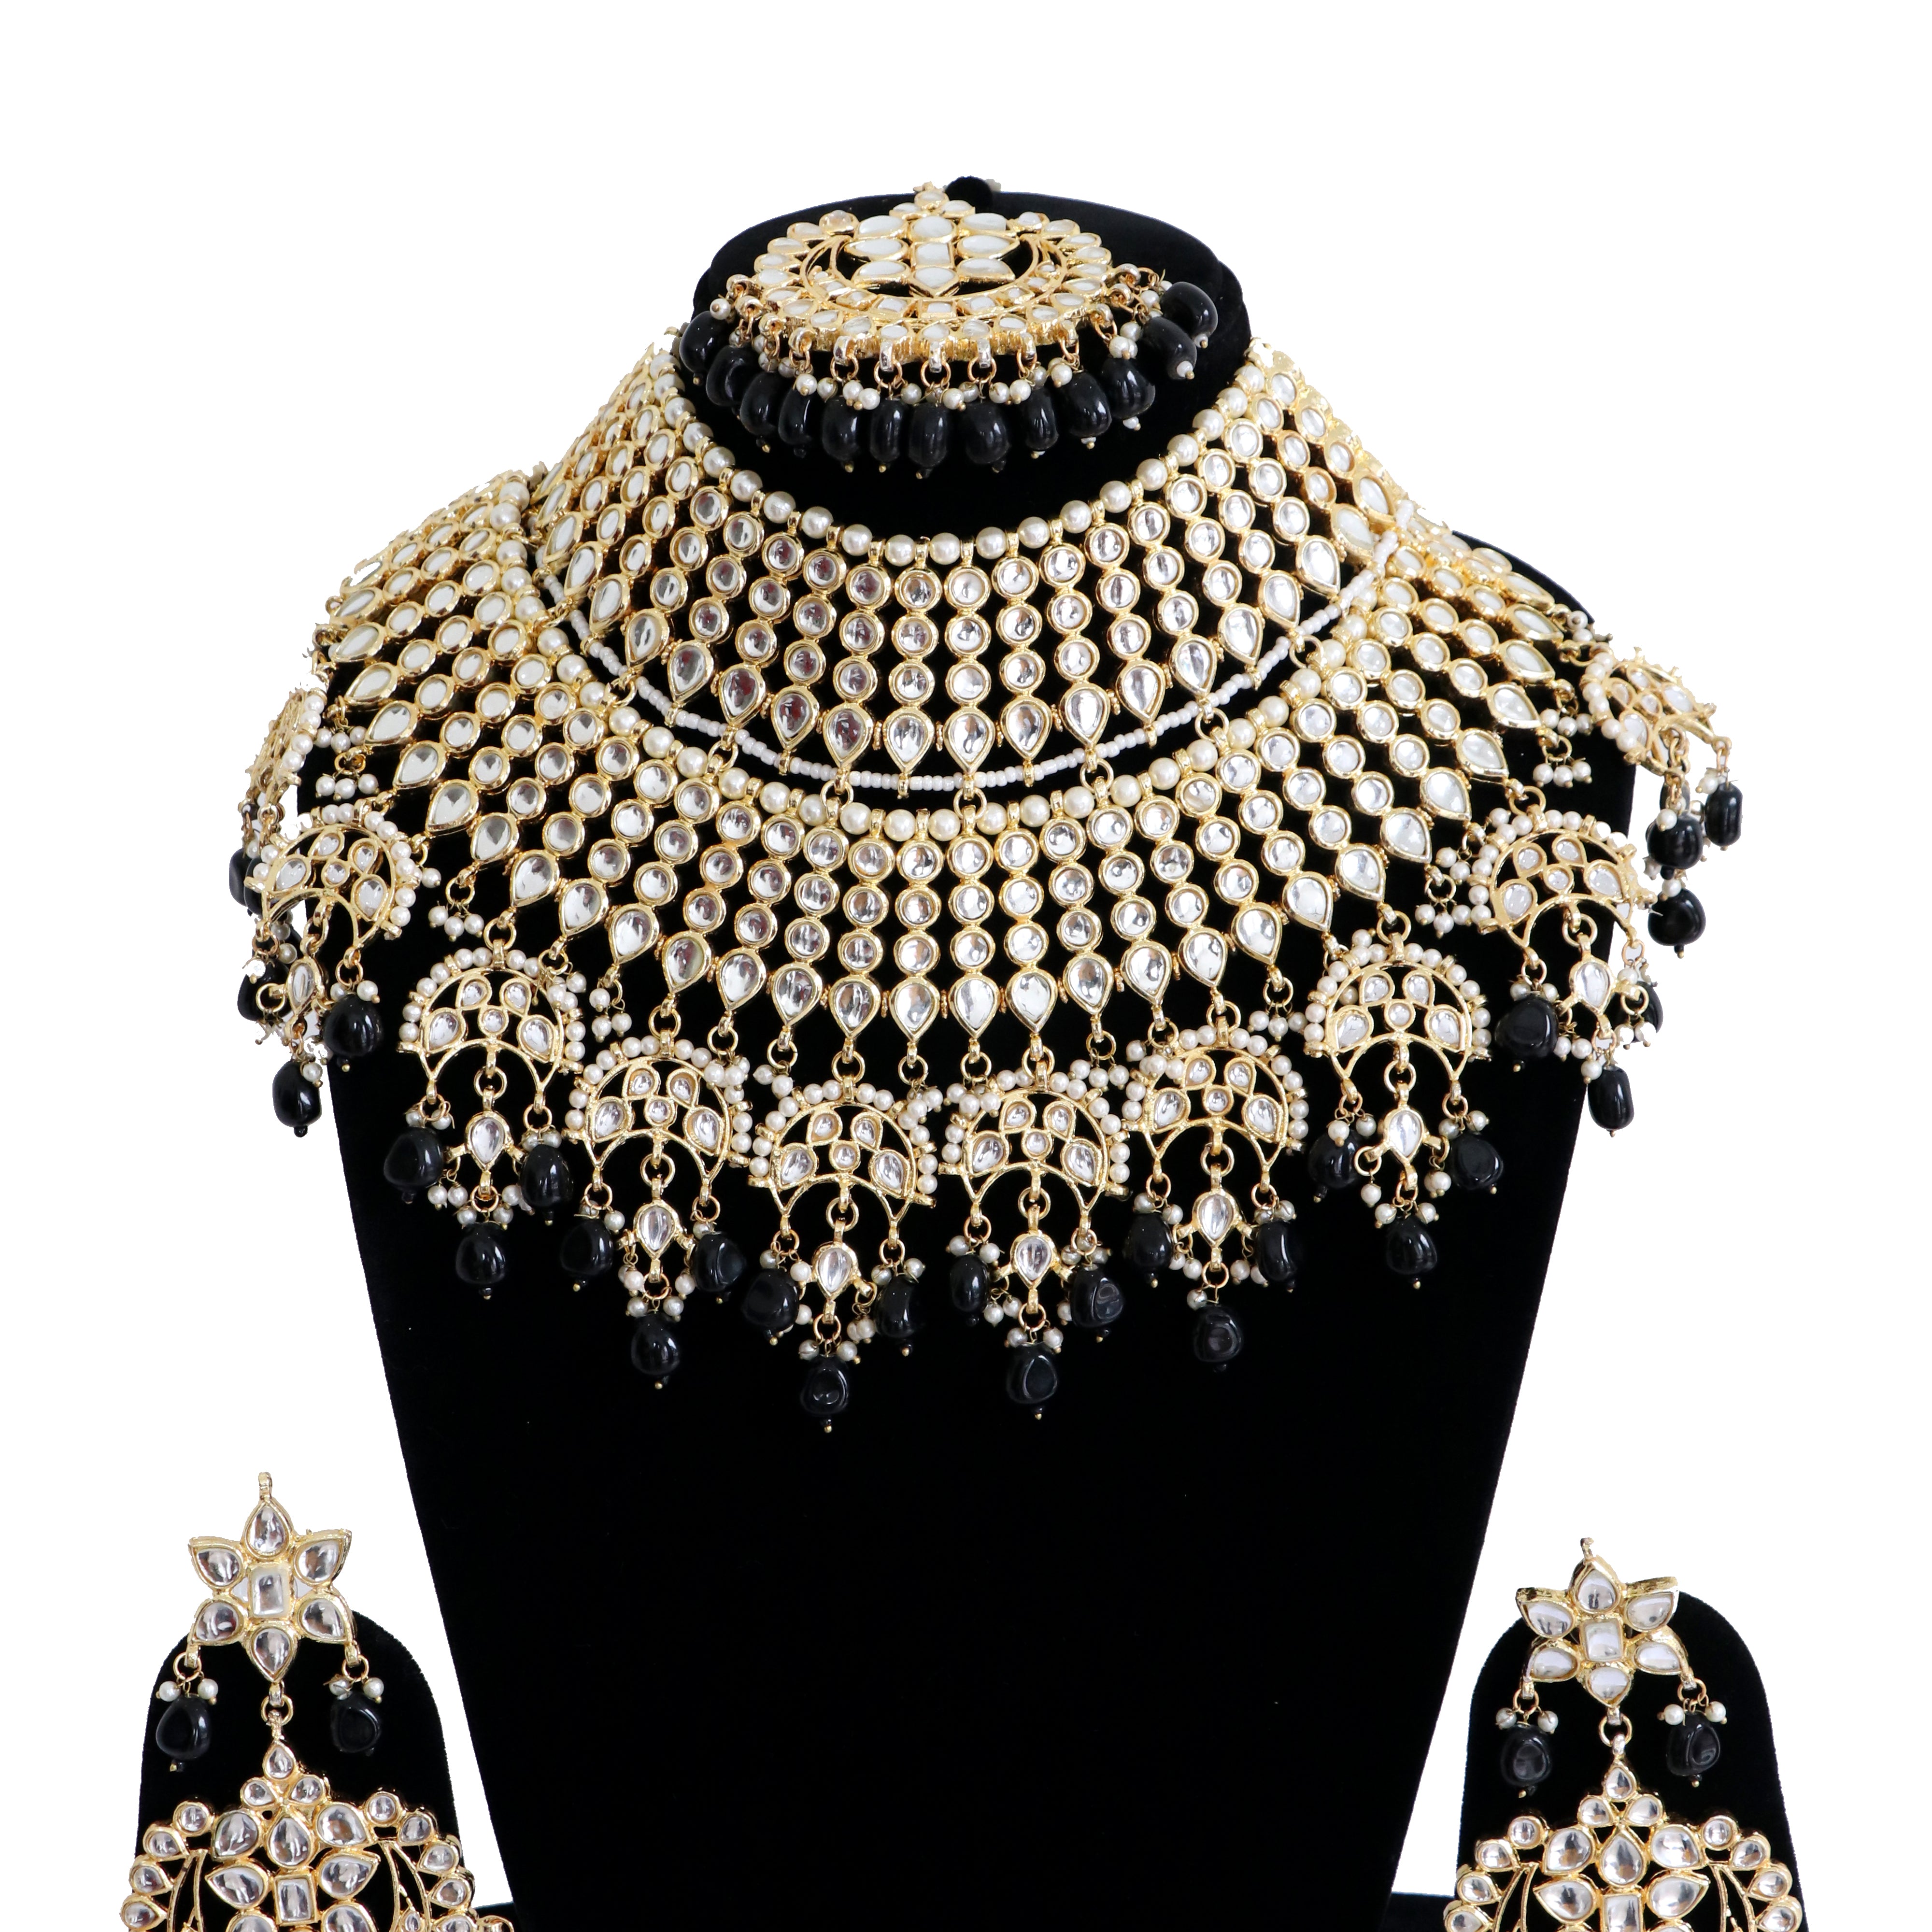 Kundan Bridal Necklace Set with Earrings and Maang Tikka - Black